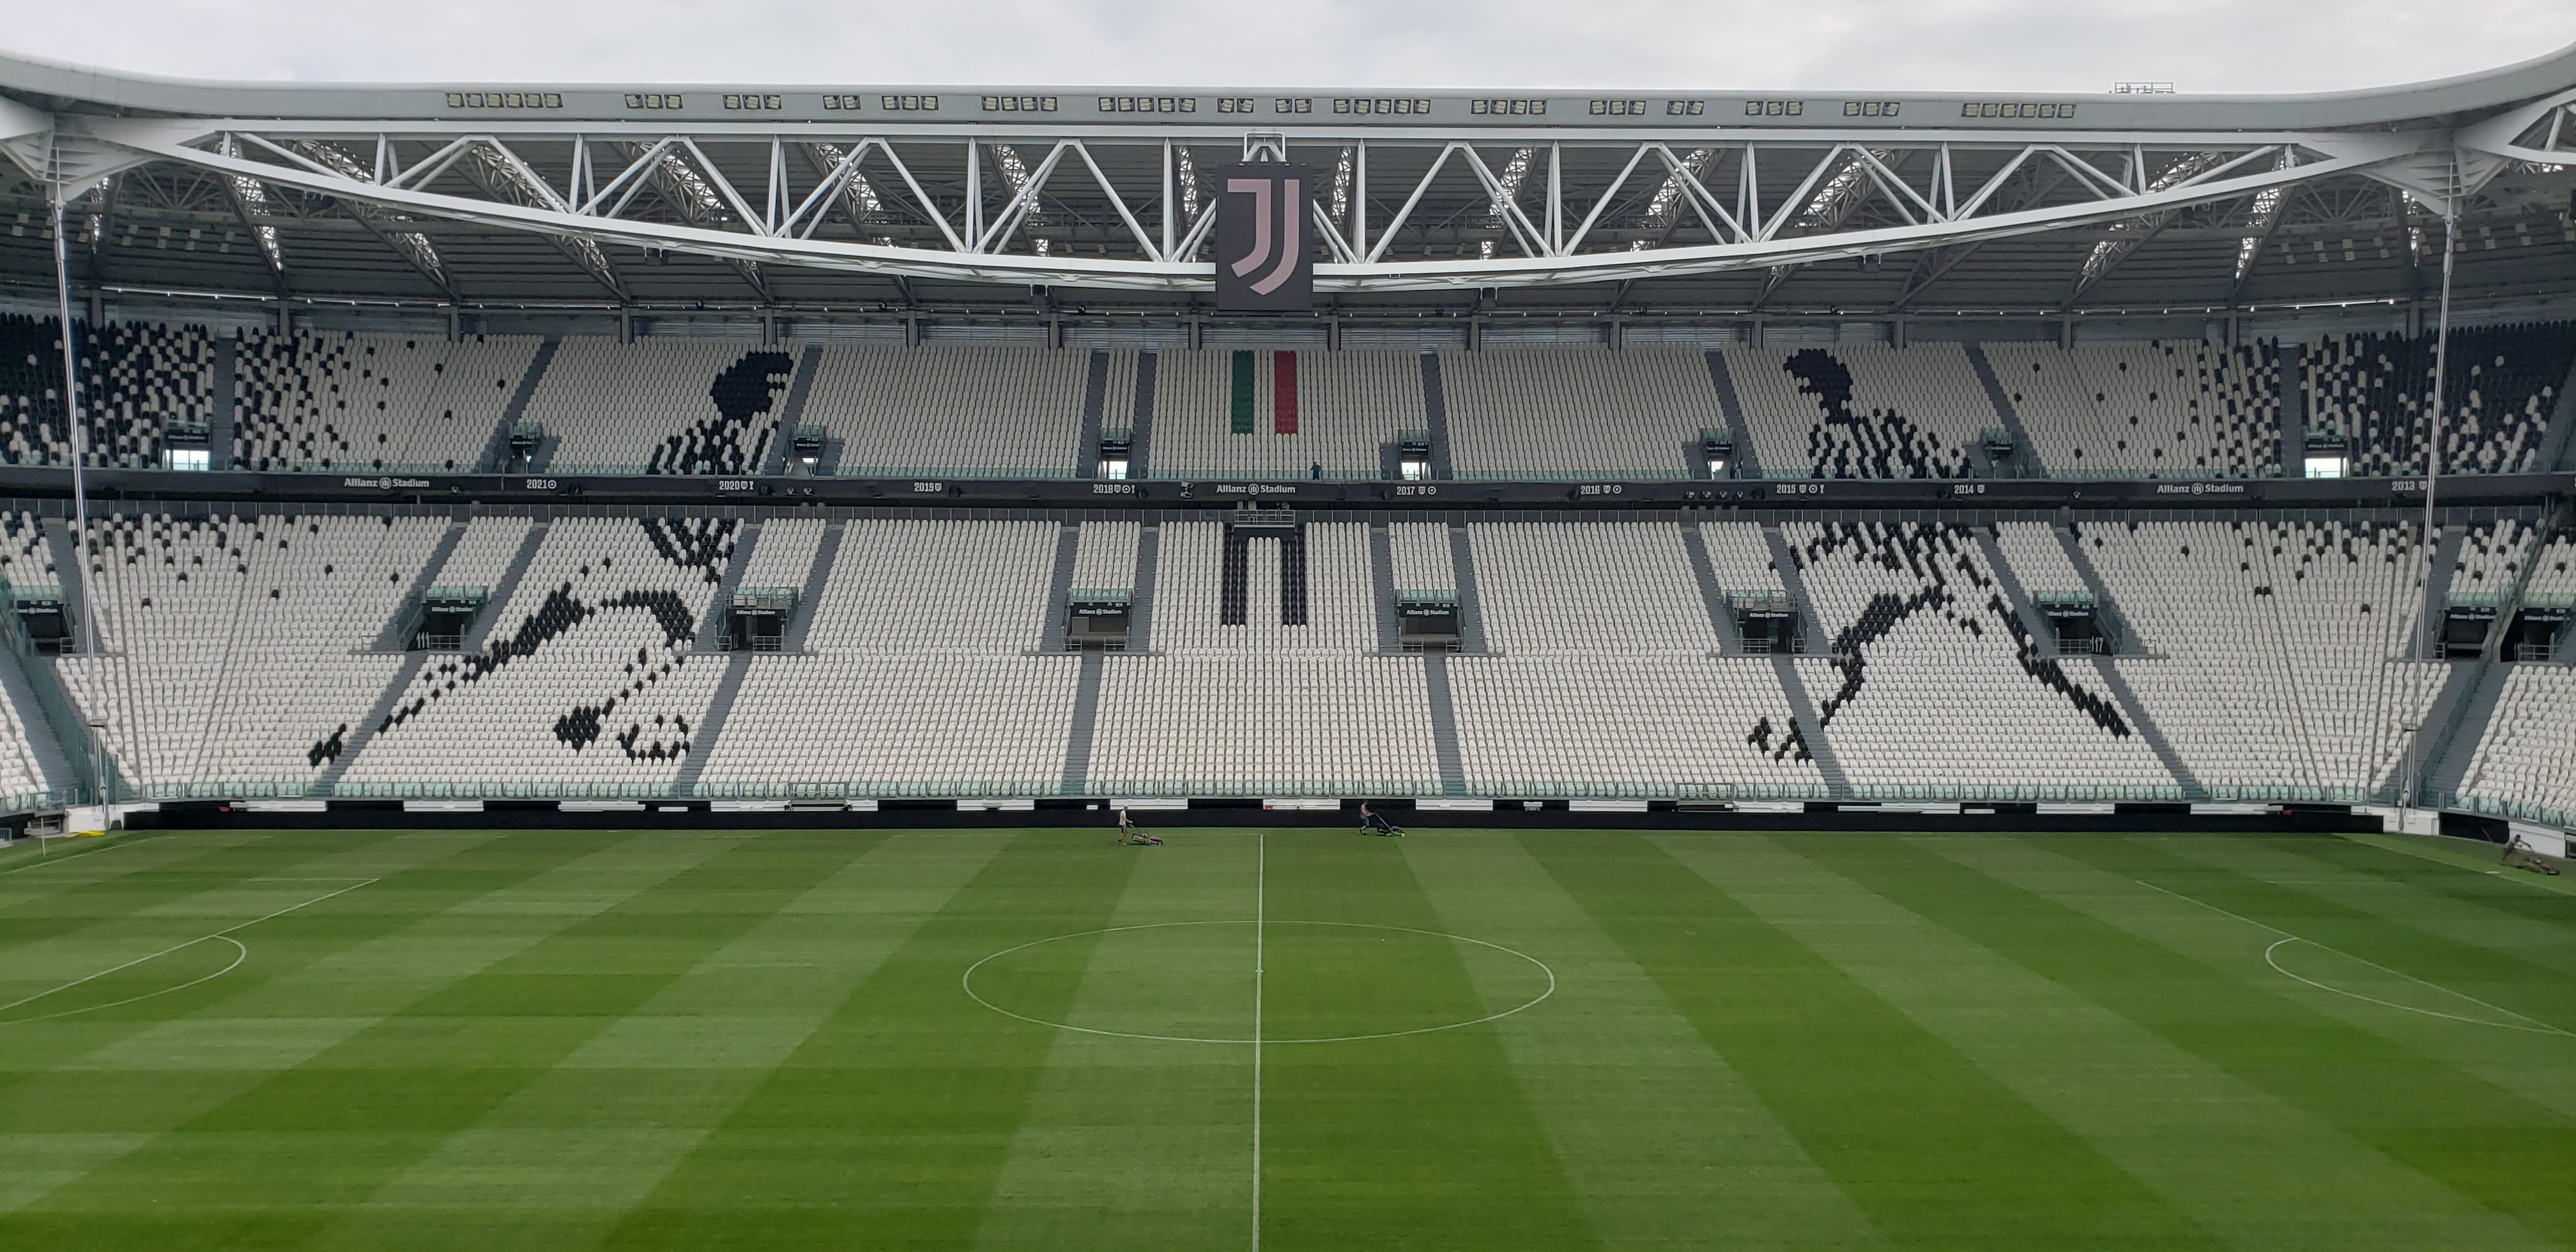 The Juventus field in the Allianz stadium.